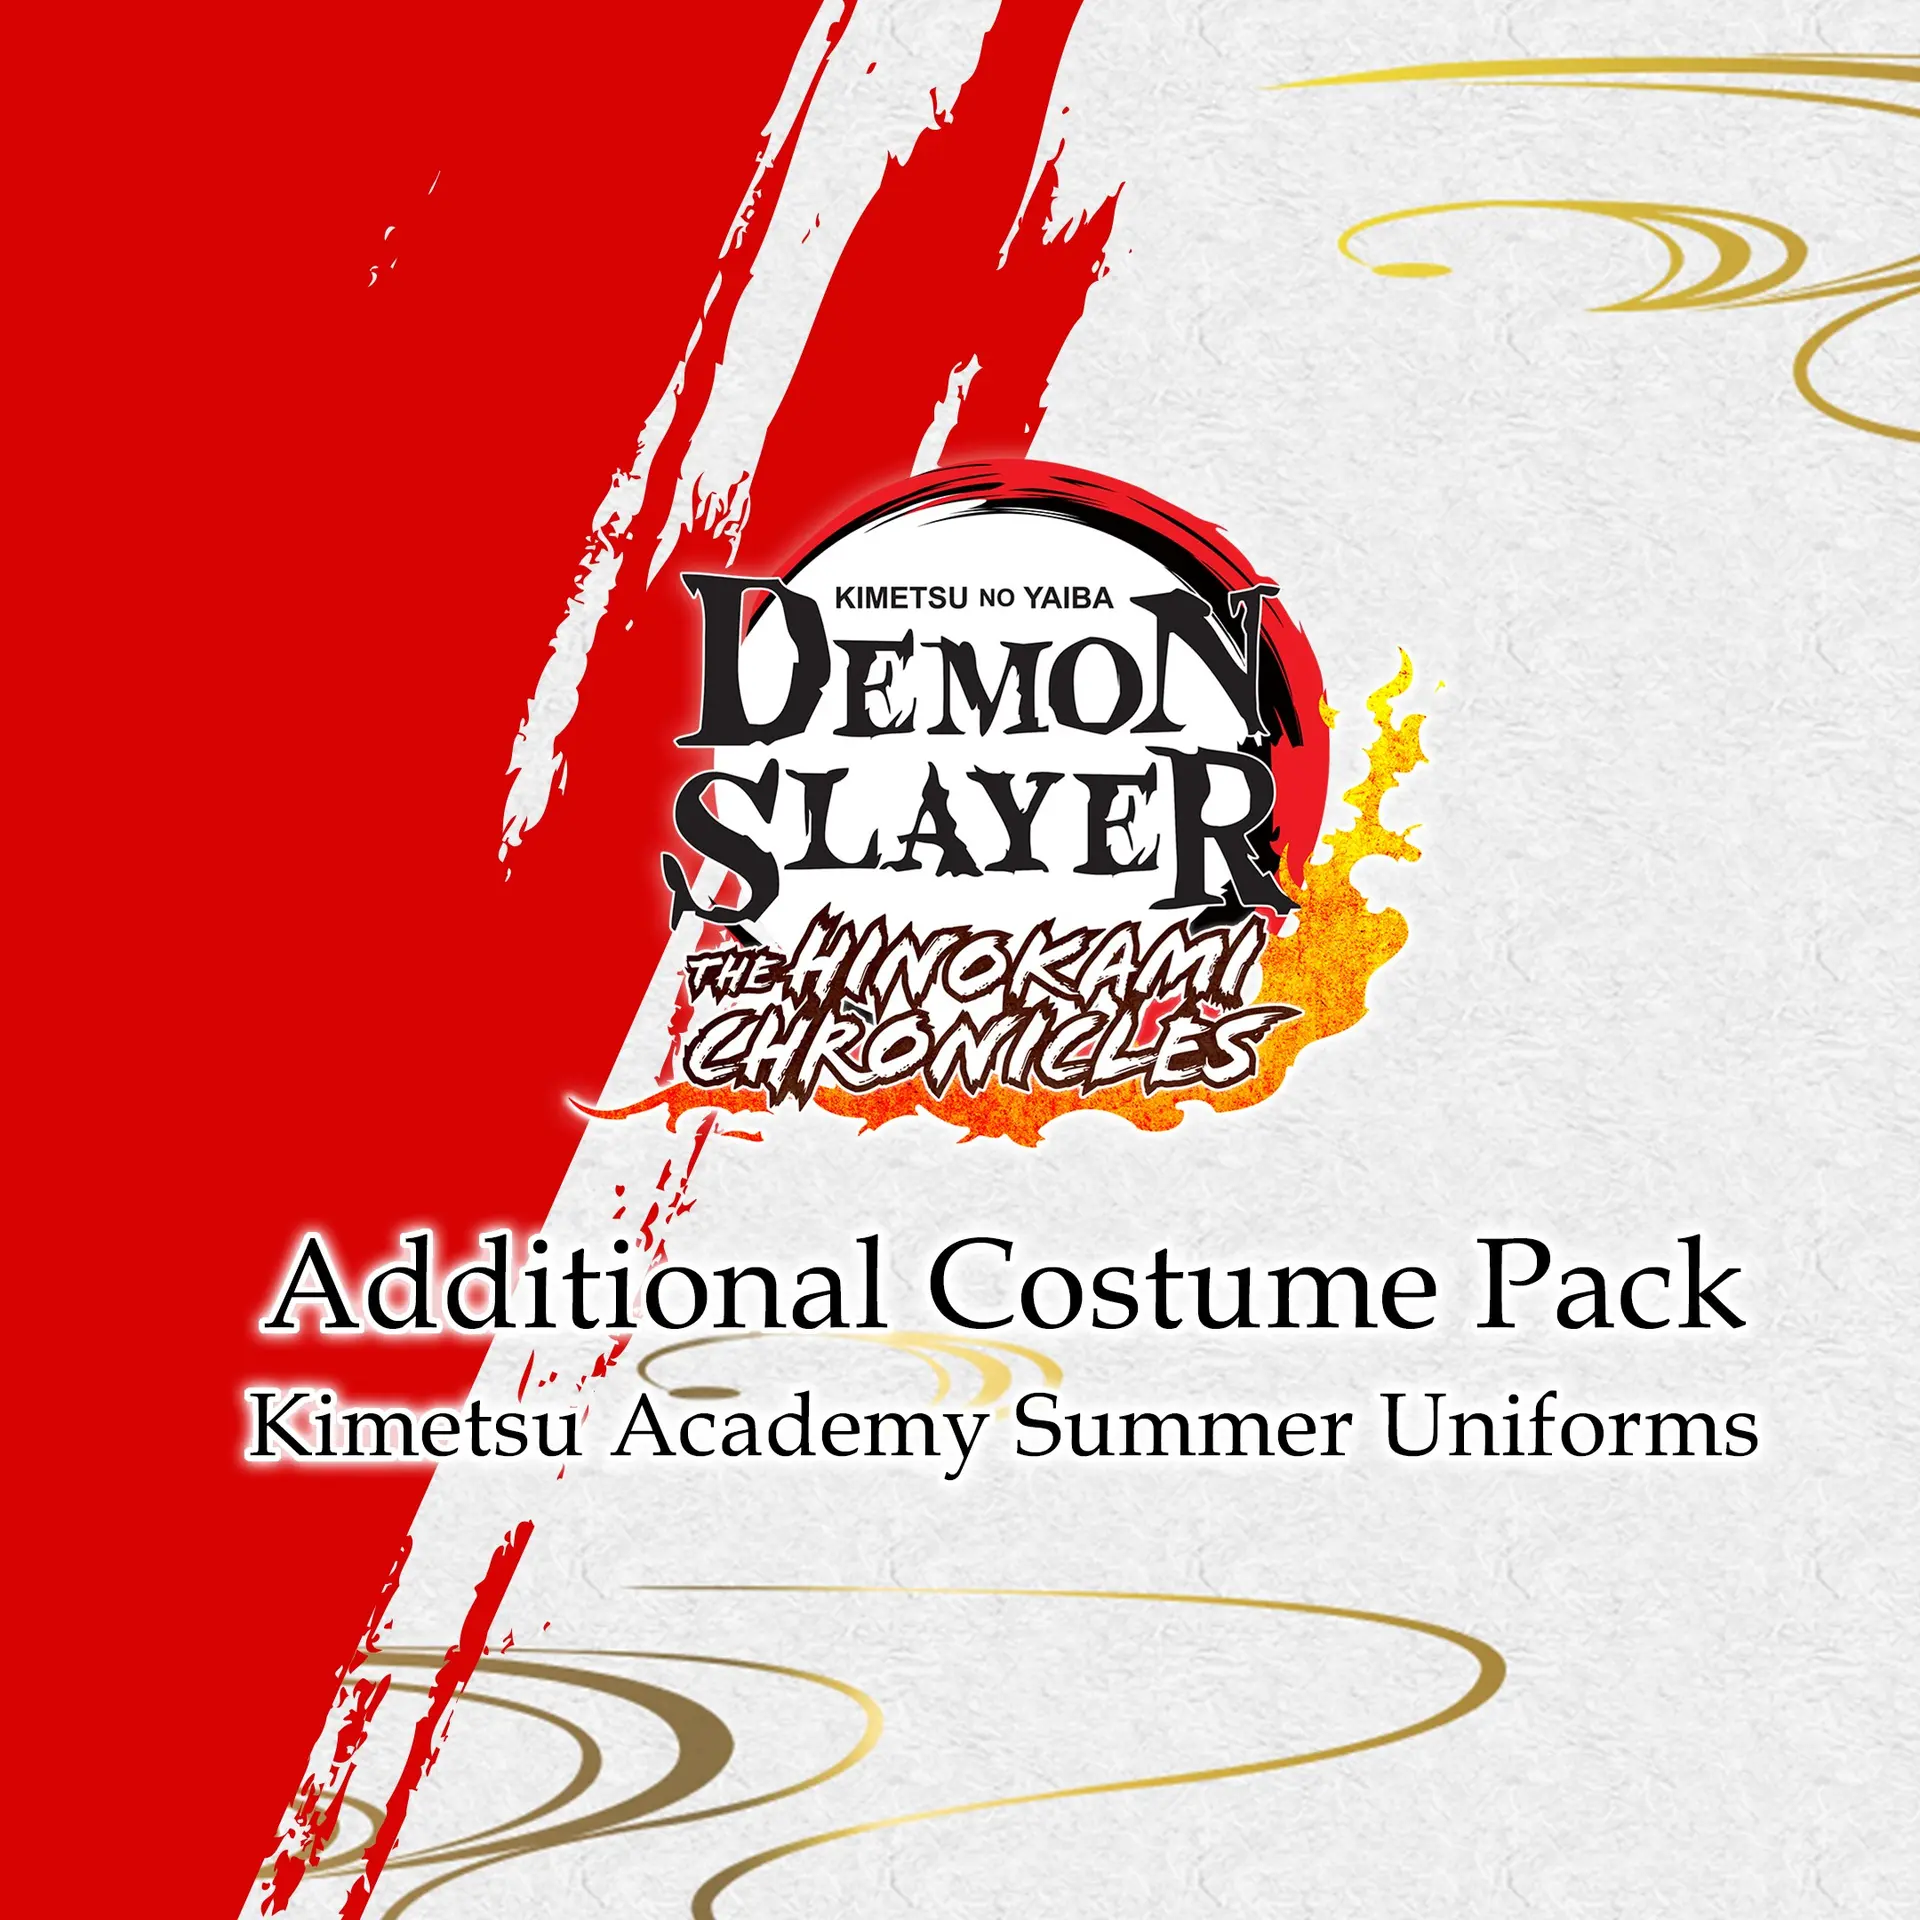 Additional Costume Pack - Kimetsu Academy Summer Uniforms (Xbox Game EU)